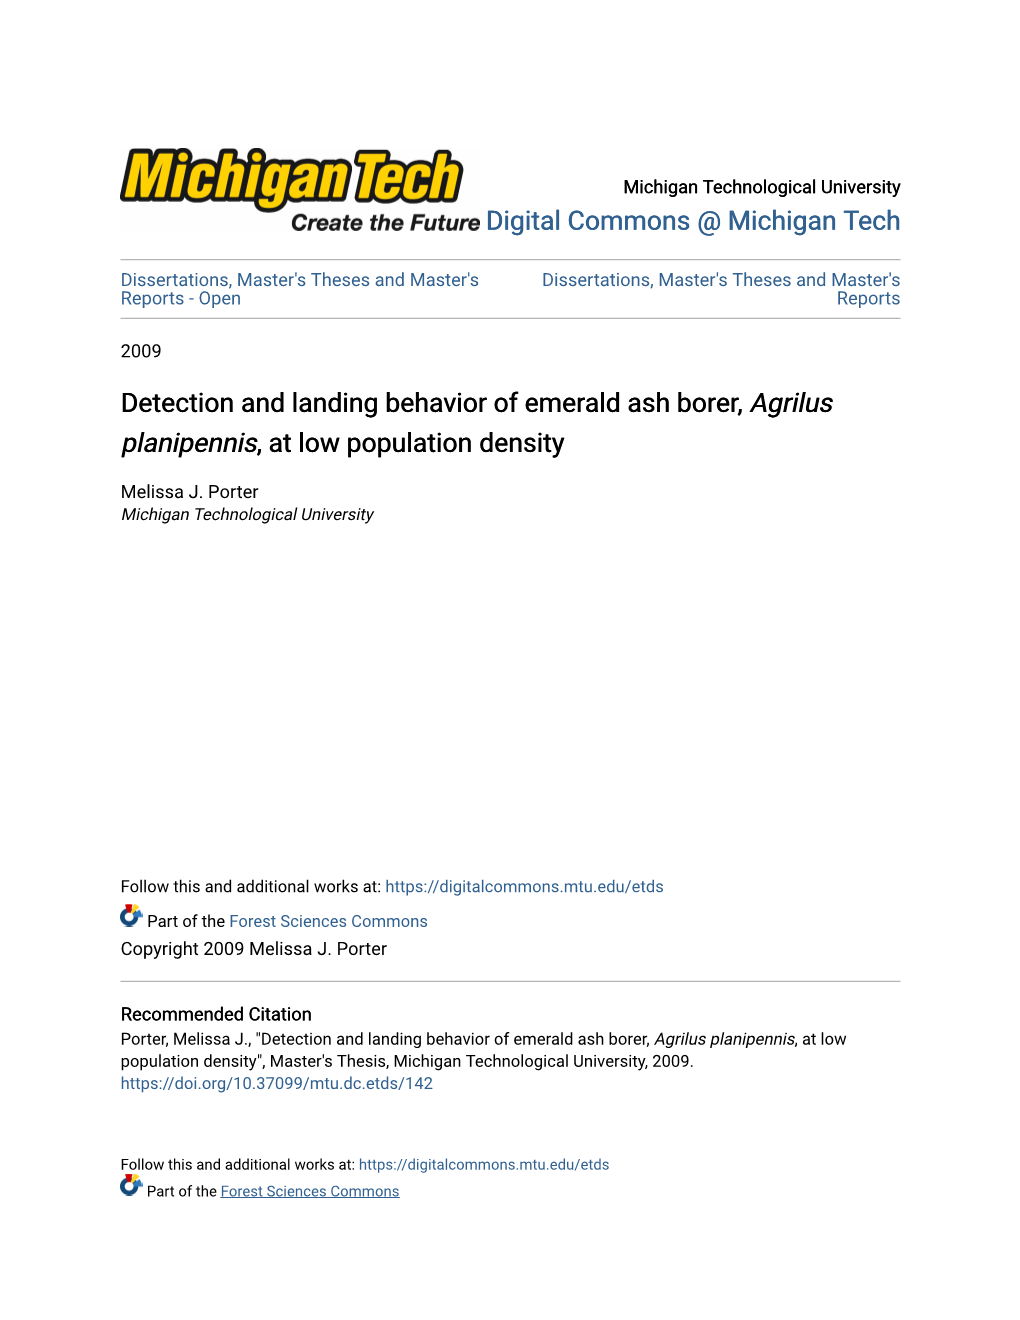 Detection and Landing Behavior of Emerald Ash Borer, Agrilus Planipennis, at Low Population Density